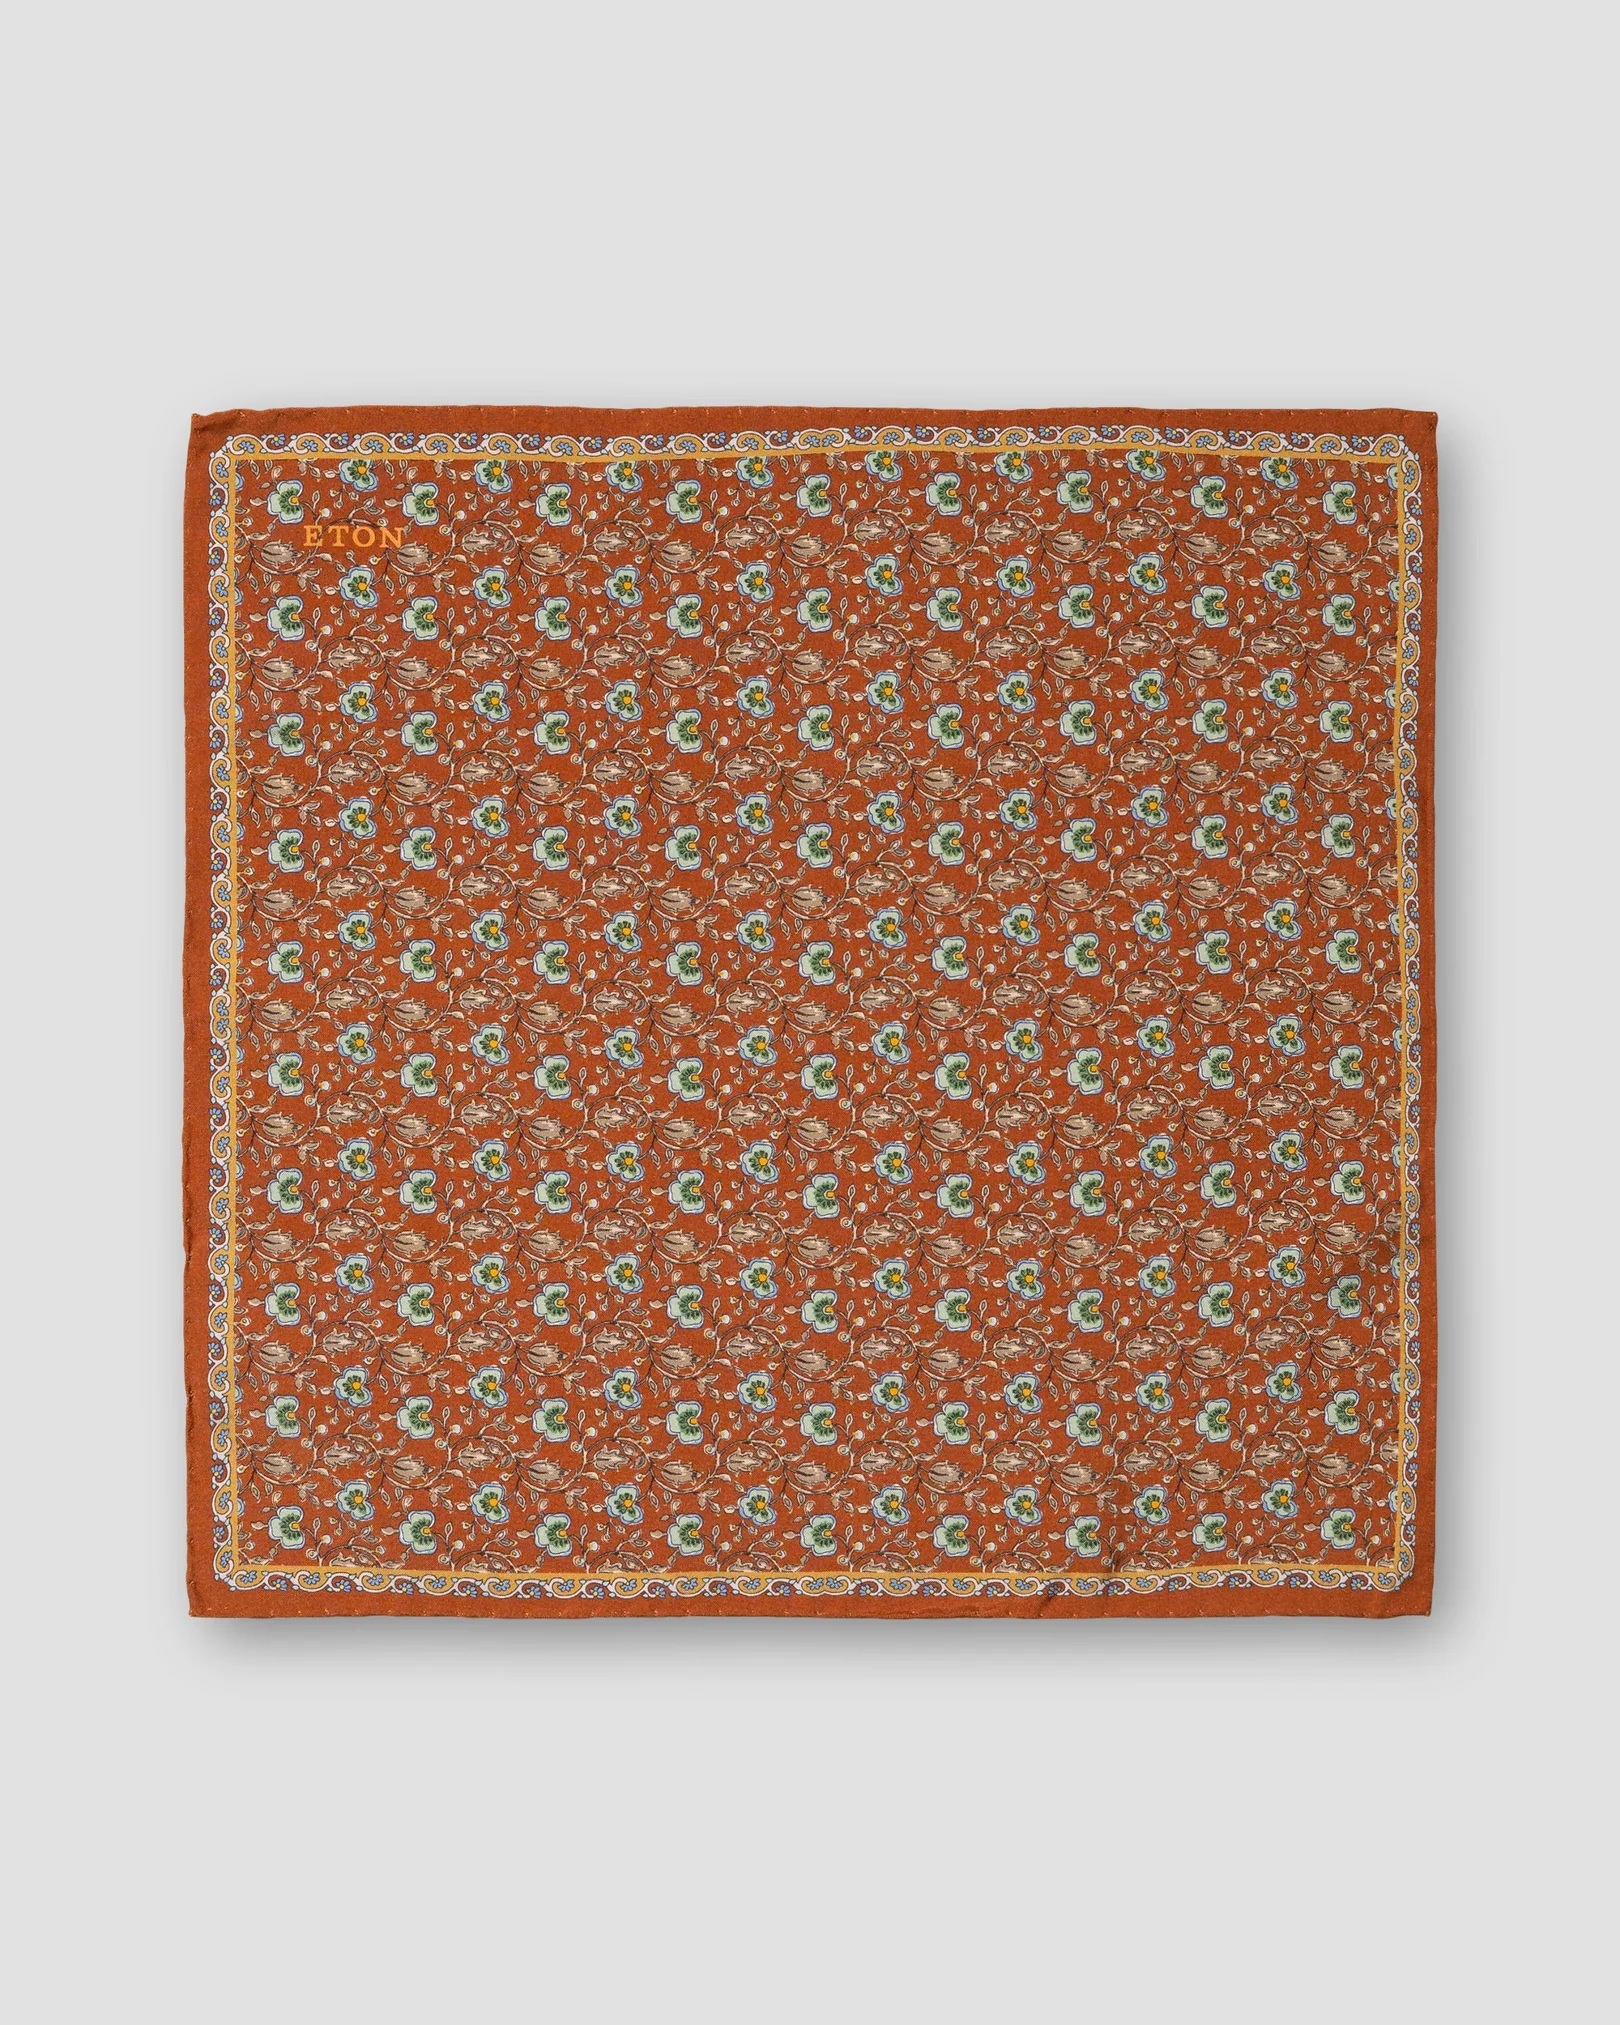 Eton - orange geometric print fuji silk pocket square